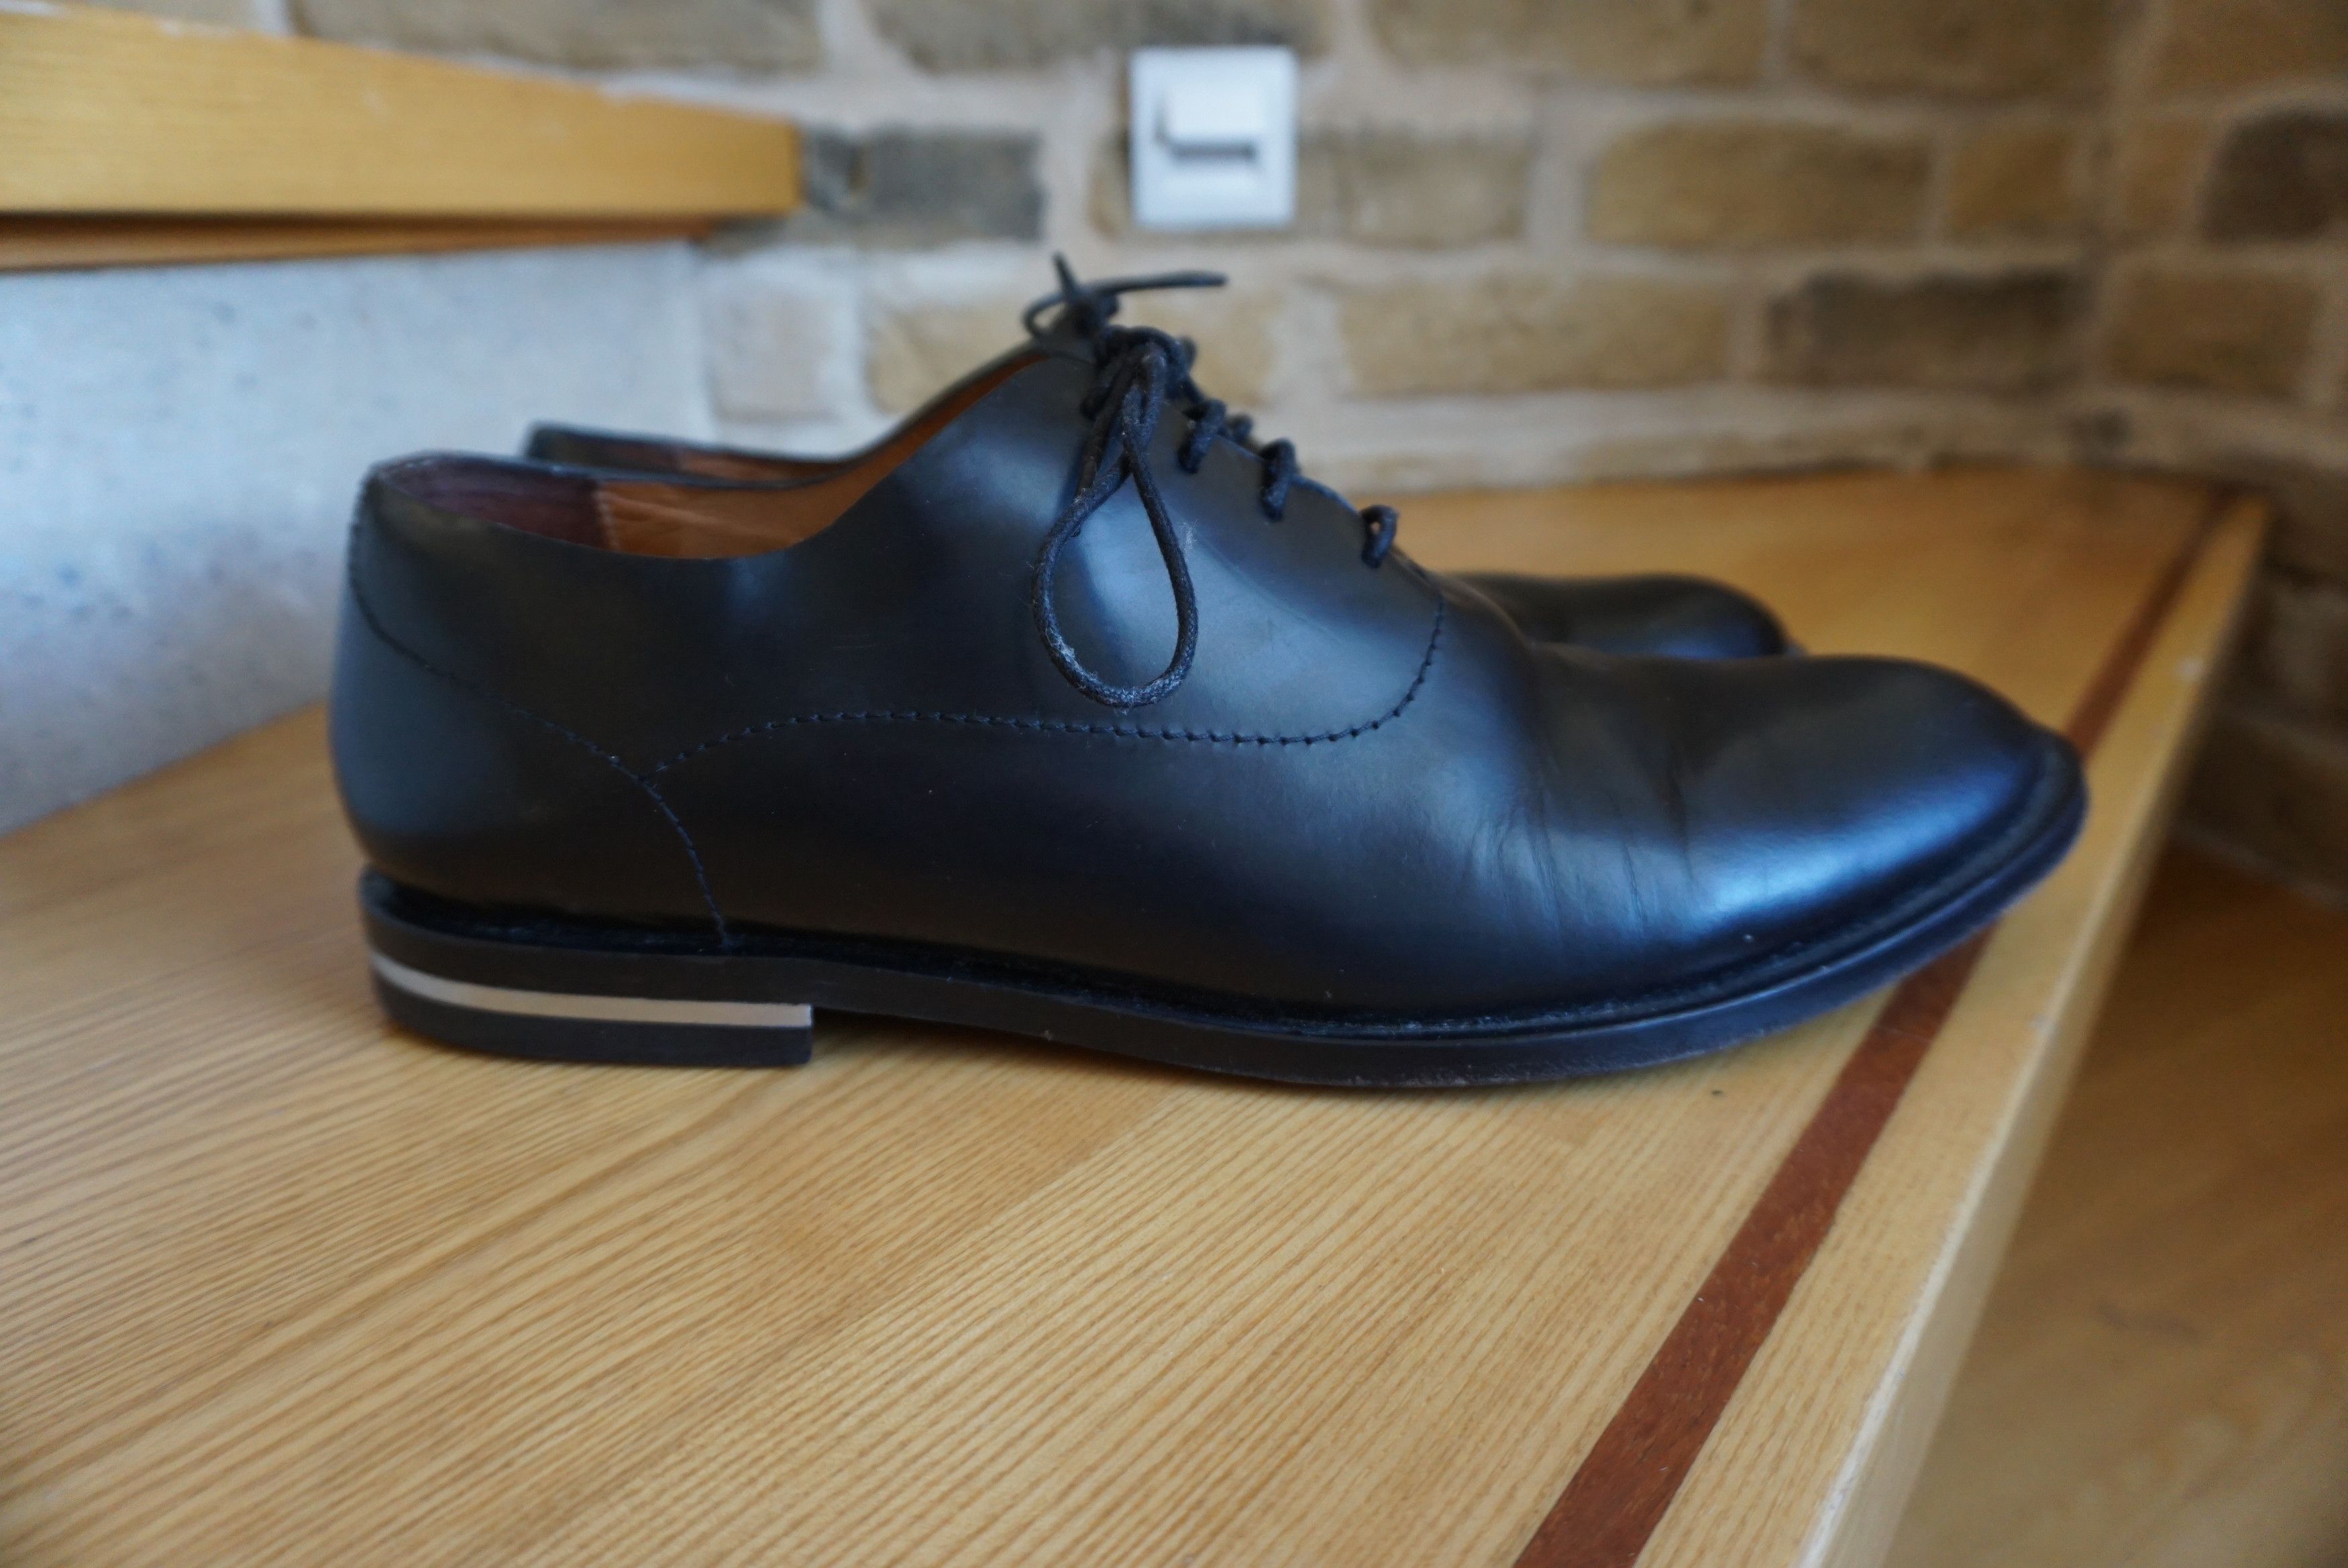 Cos COS RPR$250 leather office shoes EU44 black formal lace up Size US 10.5 / EU 43-44 - 19 Thumbnail